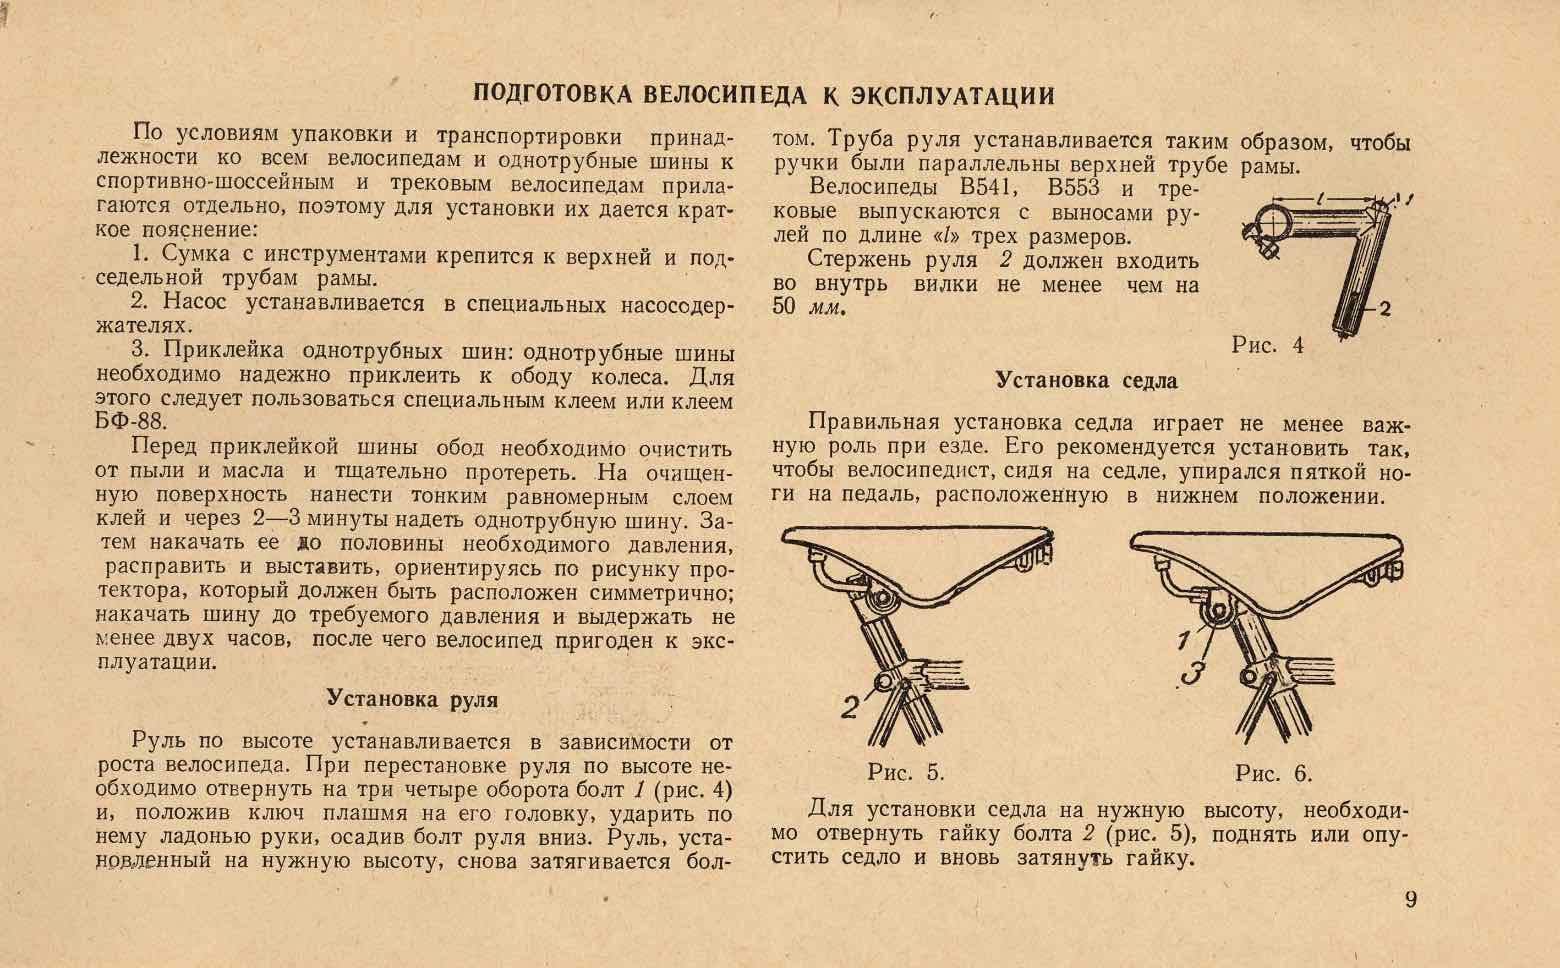 Kharkov - instructions for B541 B553 & track bike - page 9 main image